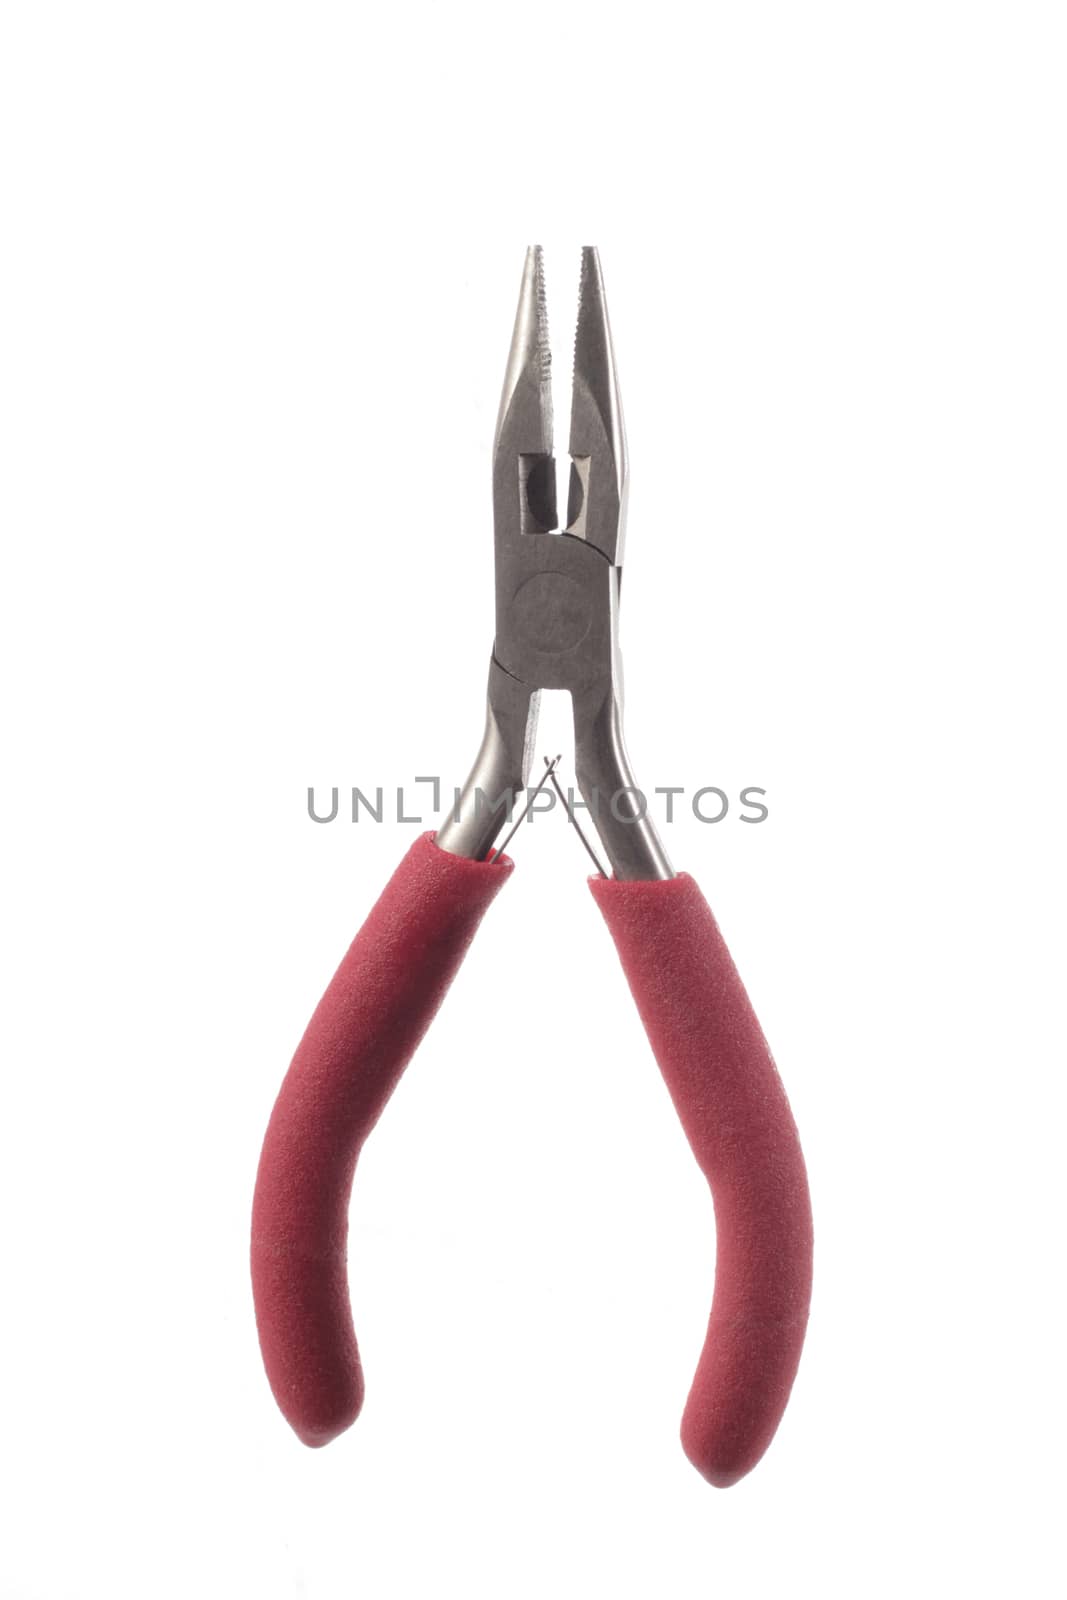 red pliers by orcearo